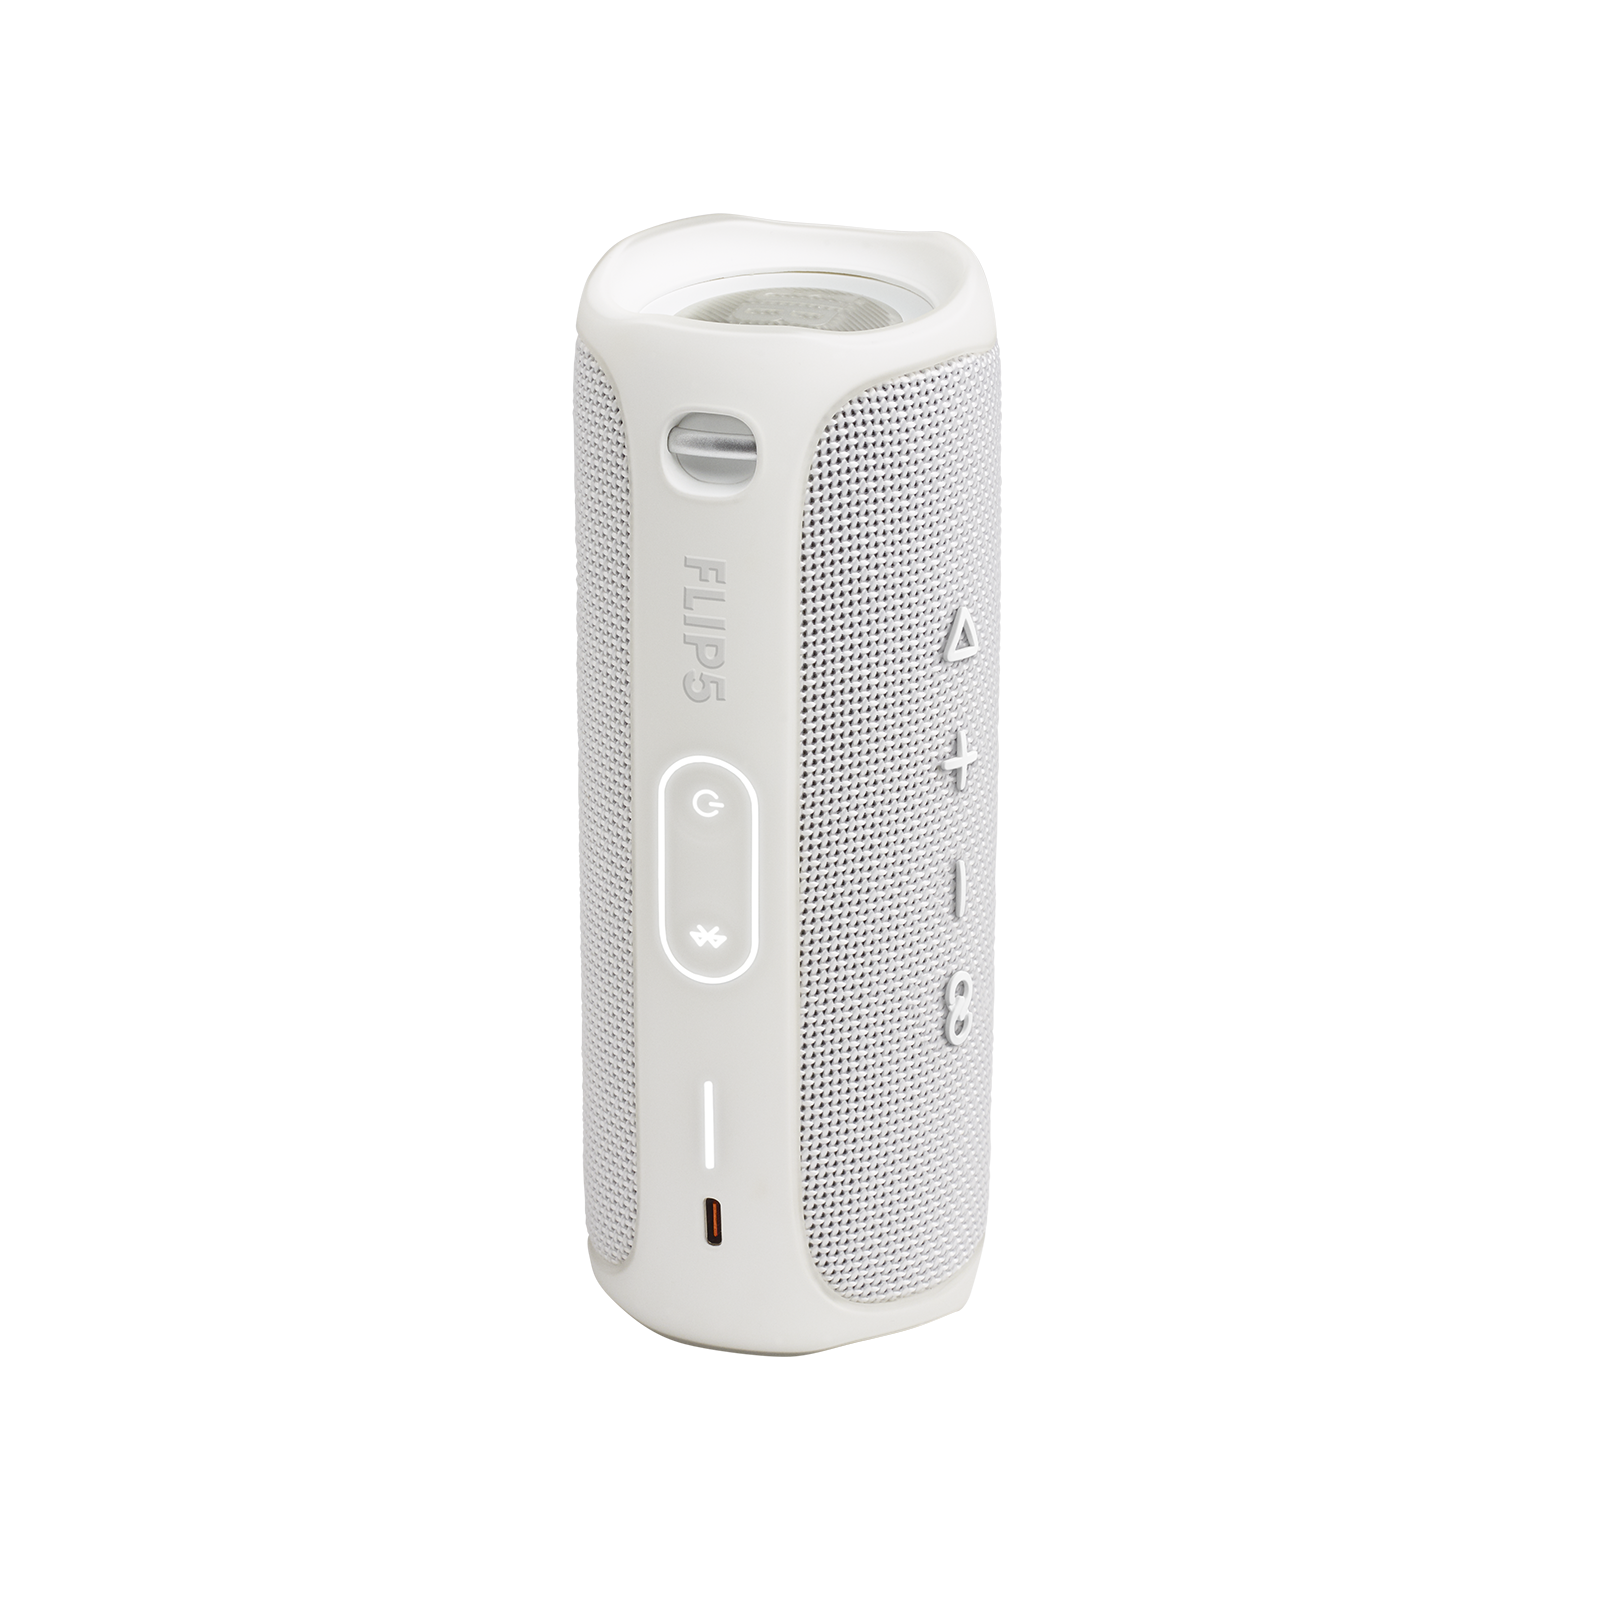 JBL Flip 5 - White - Portable Waterproof Speaker - Back